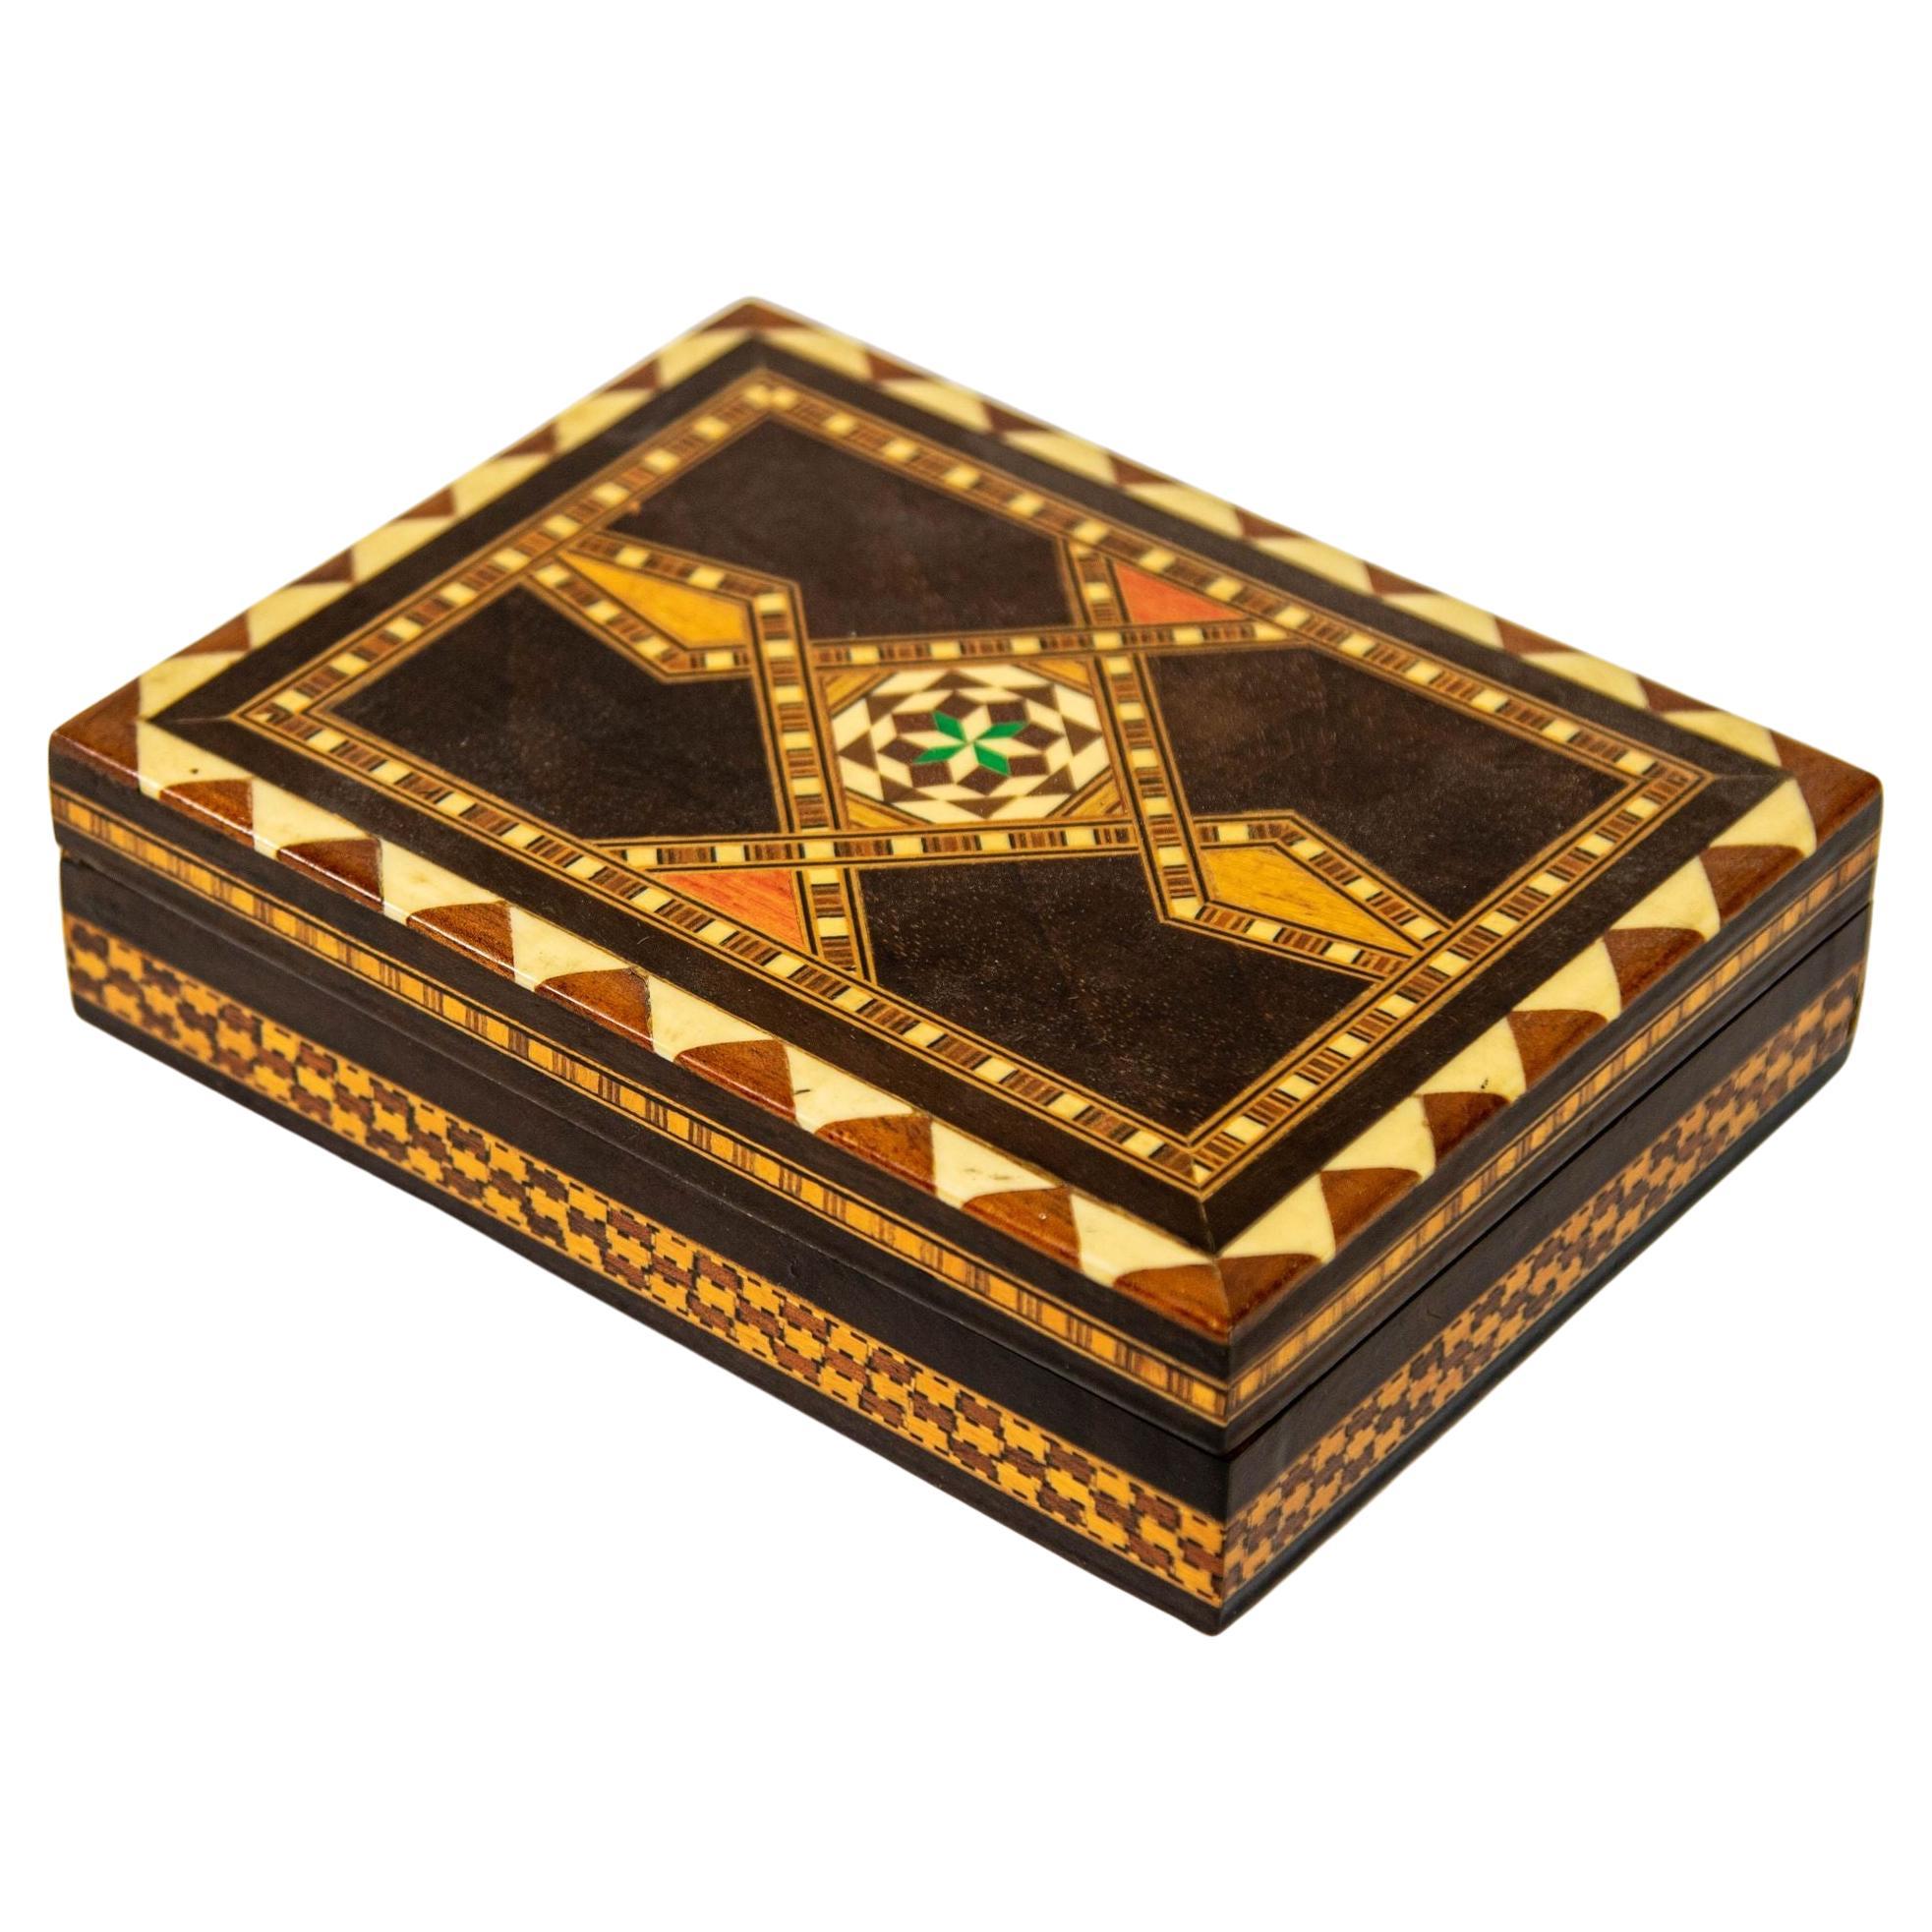 Moorish Spain Inlaid Marquetry Mosaic Box, 1950s